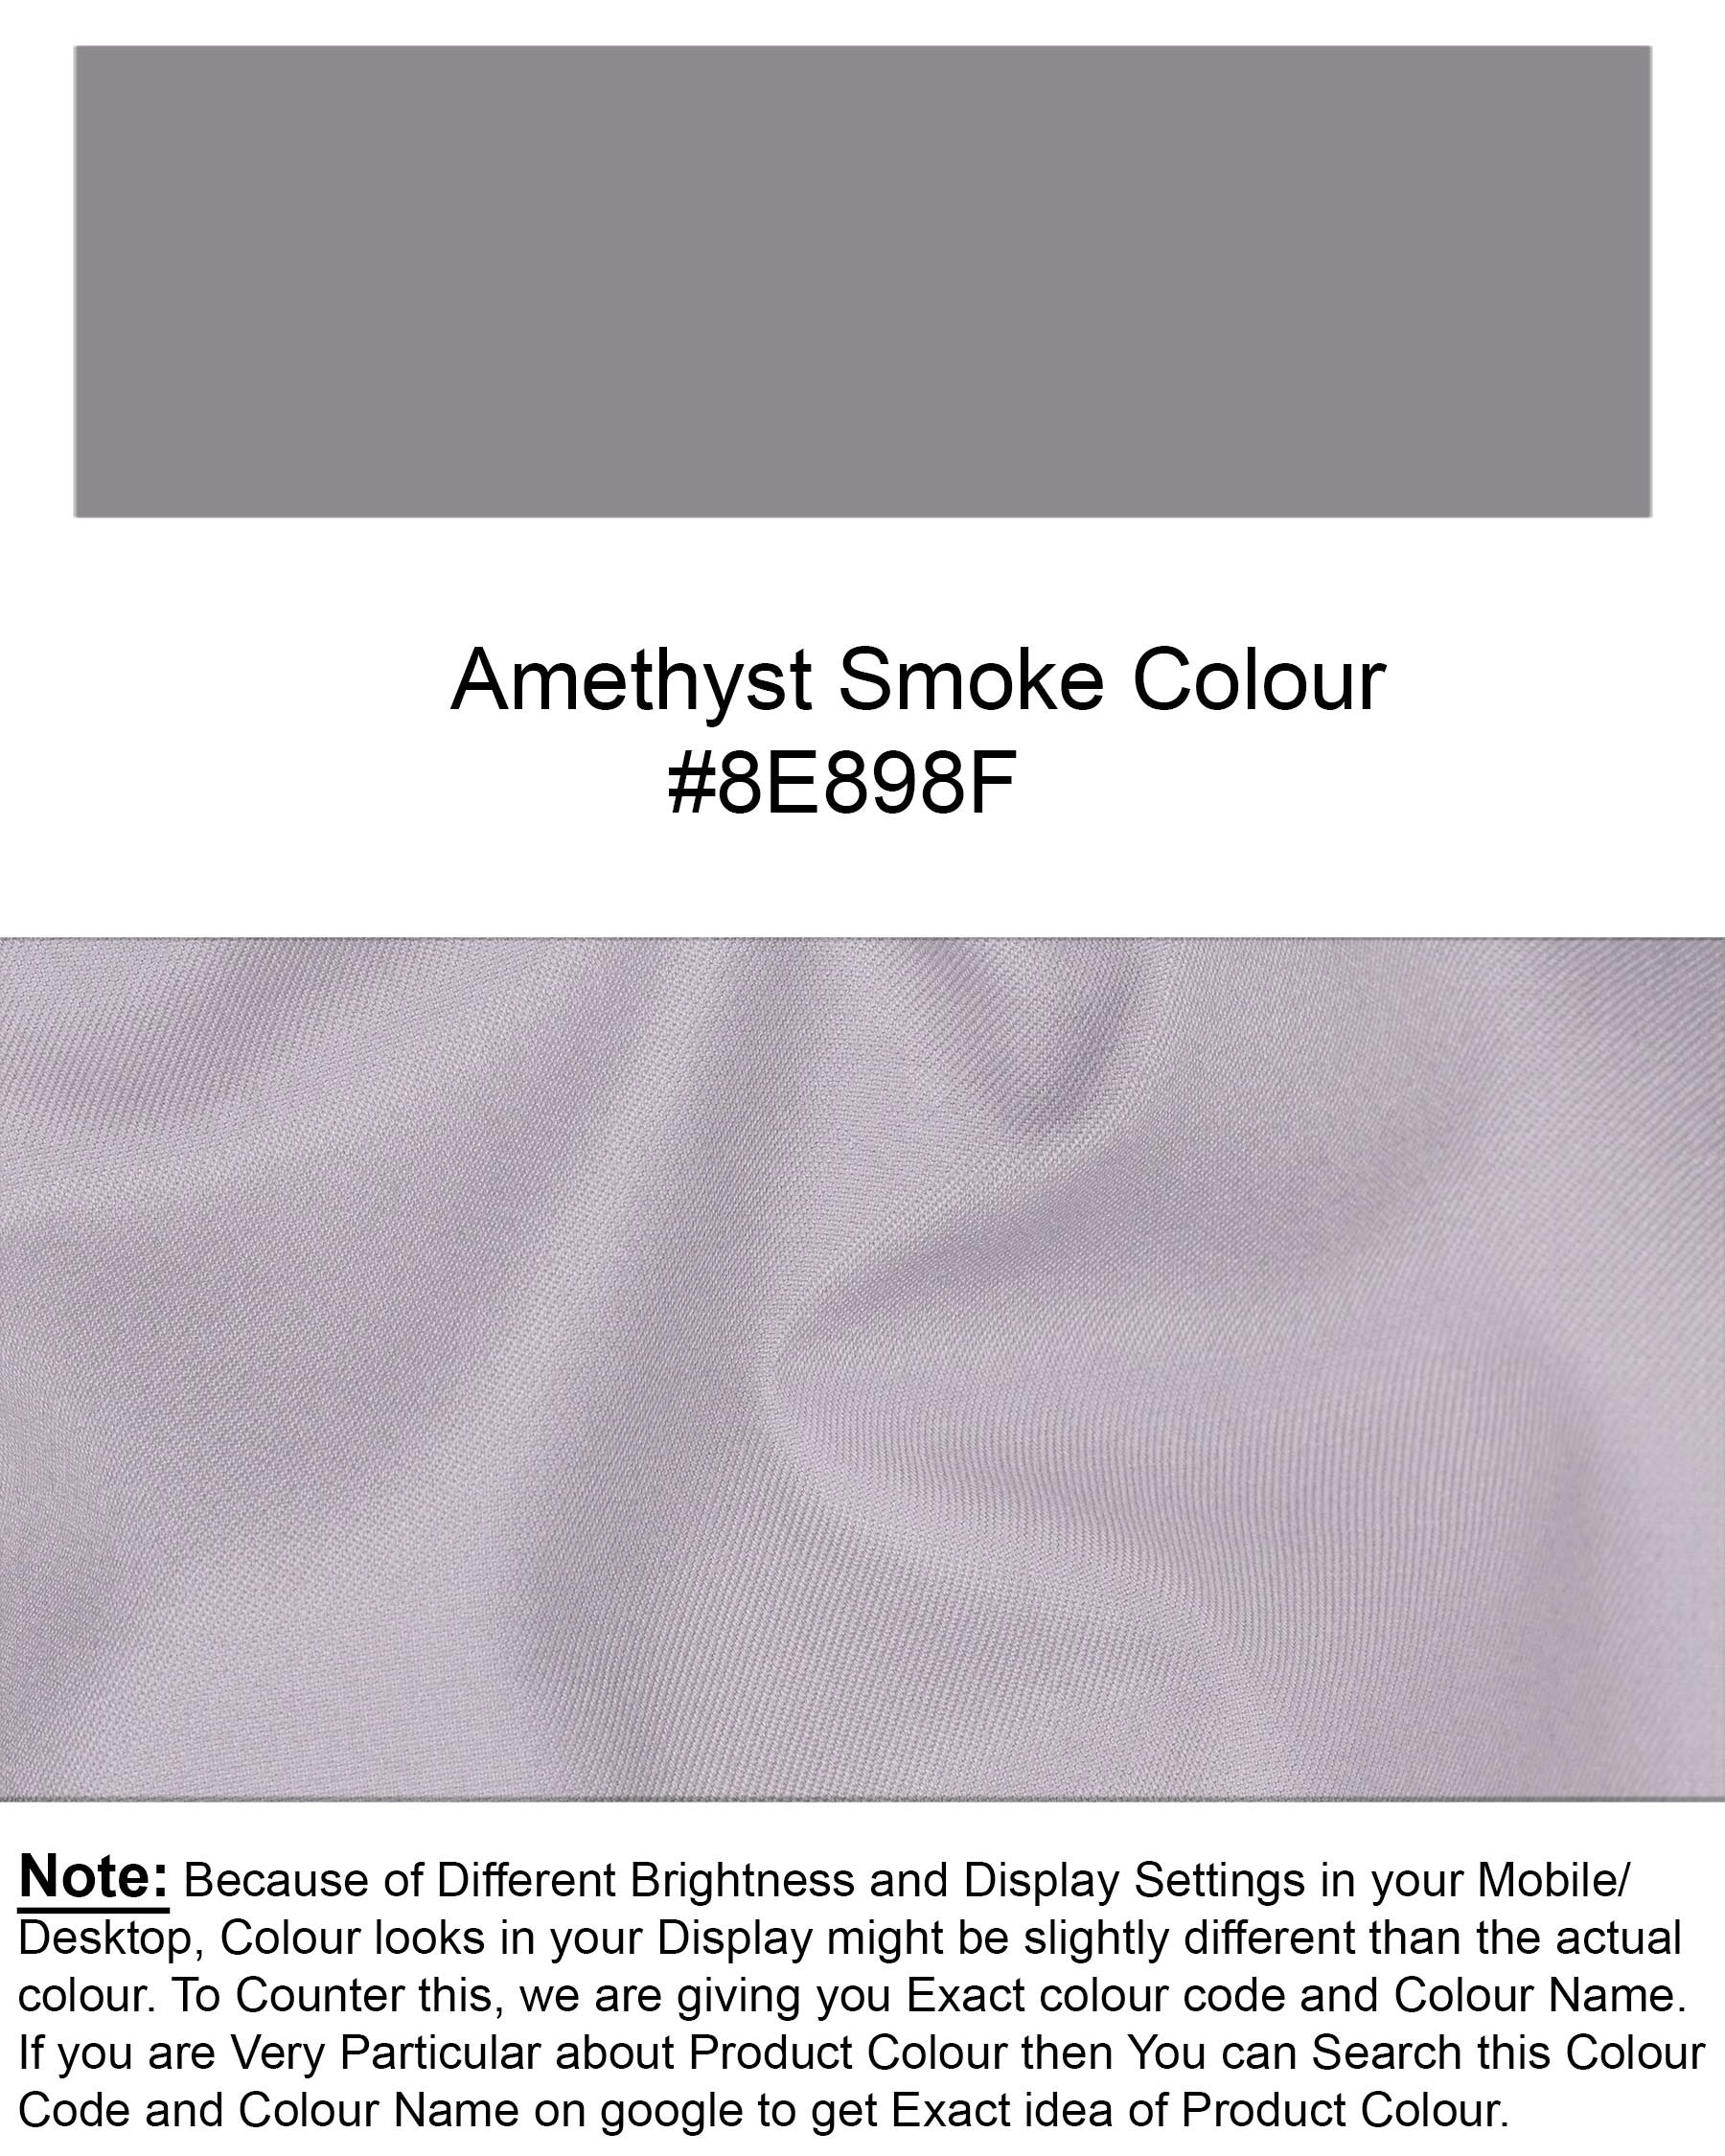 Amethyst Smoke Gray Double-Breasted Blazer BL1945-DB-36,BL1945-DB-38,BL1945-DB-40,BL1945-DB-42,BL1945-DB-44,BL1945-DB-46,BL1945-DB-48,BL1945-DB-50,BL1945-DB-52,BL1945-DB-54,BL1945-DB-56,BL1945-DB-58,BL1945-DB-60